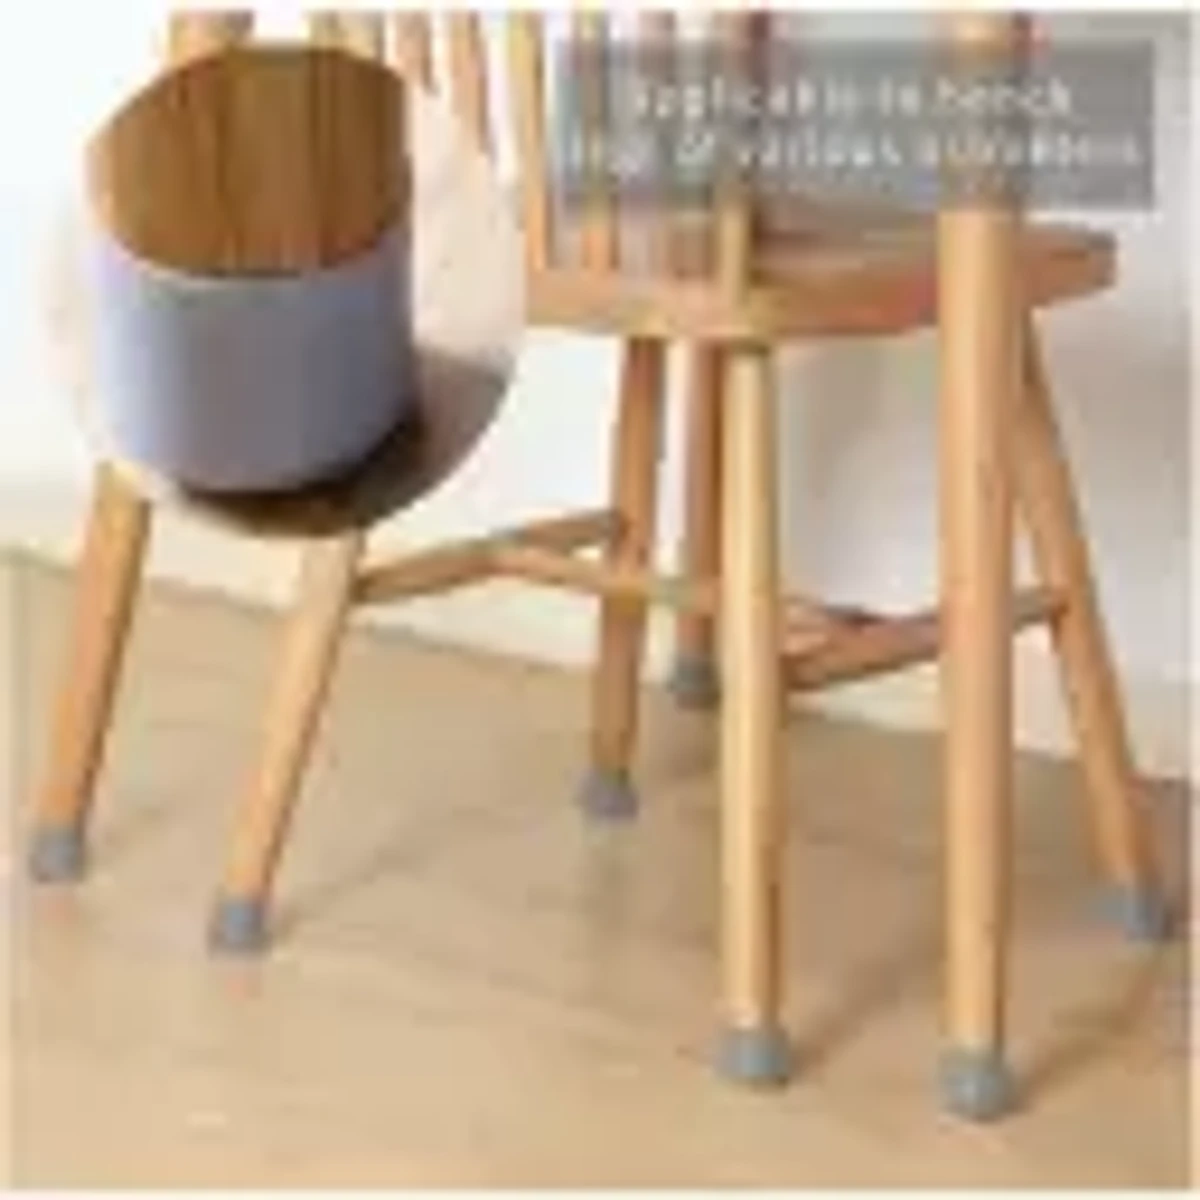 28 pcs Chair Leg Floor Protectors (Gray colour)